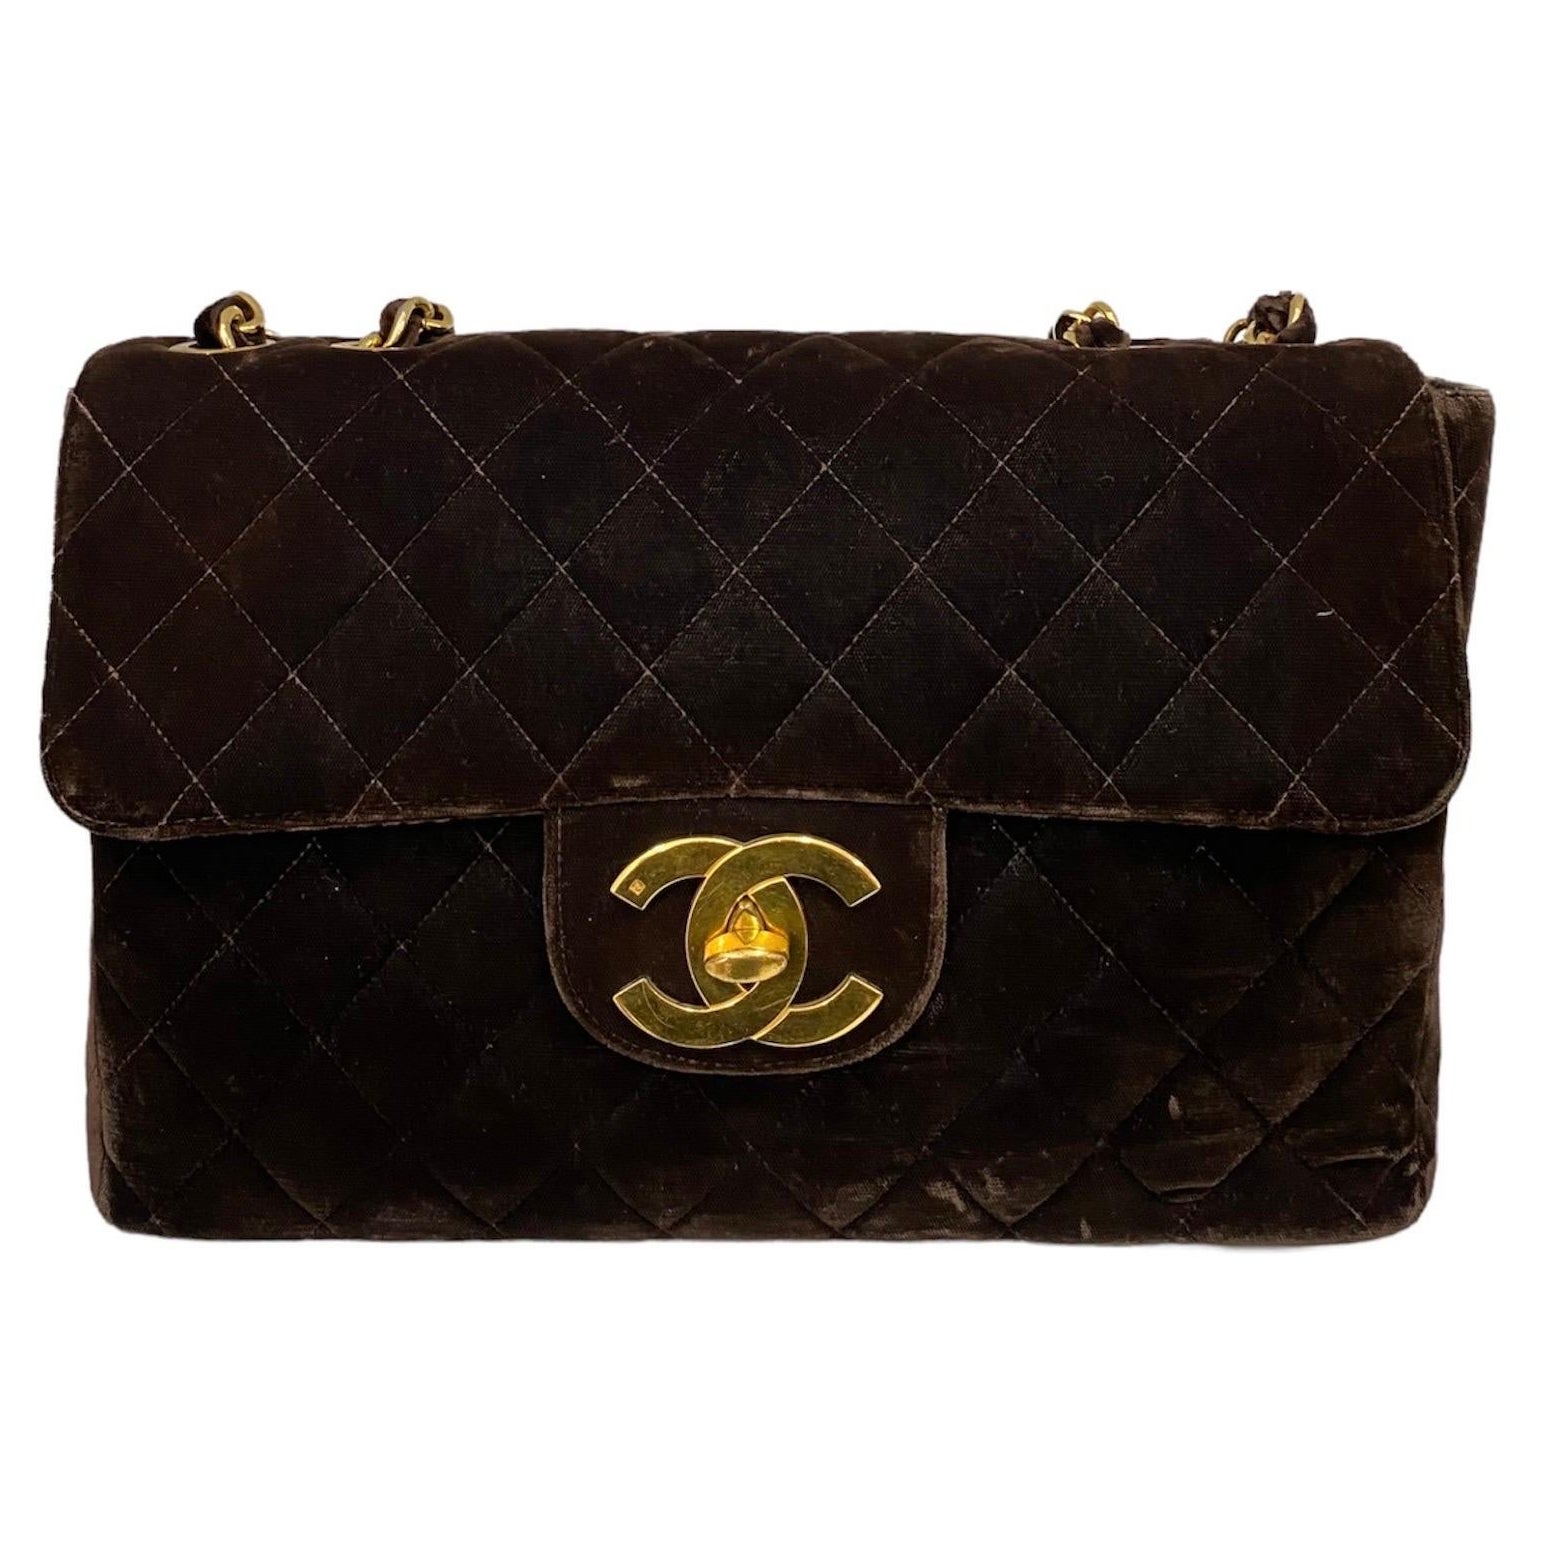 Chanel Big Bags - 28 For Sale on 1stDibs